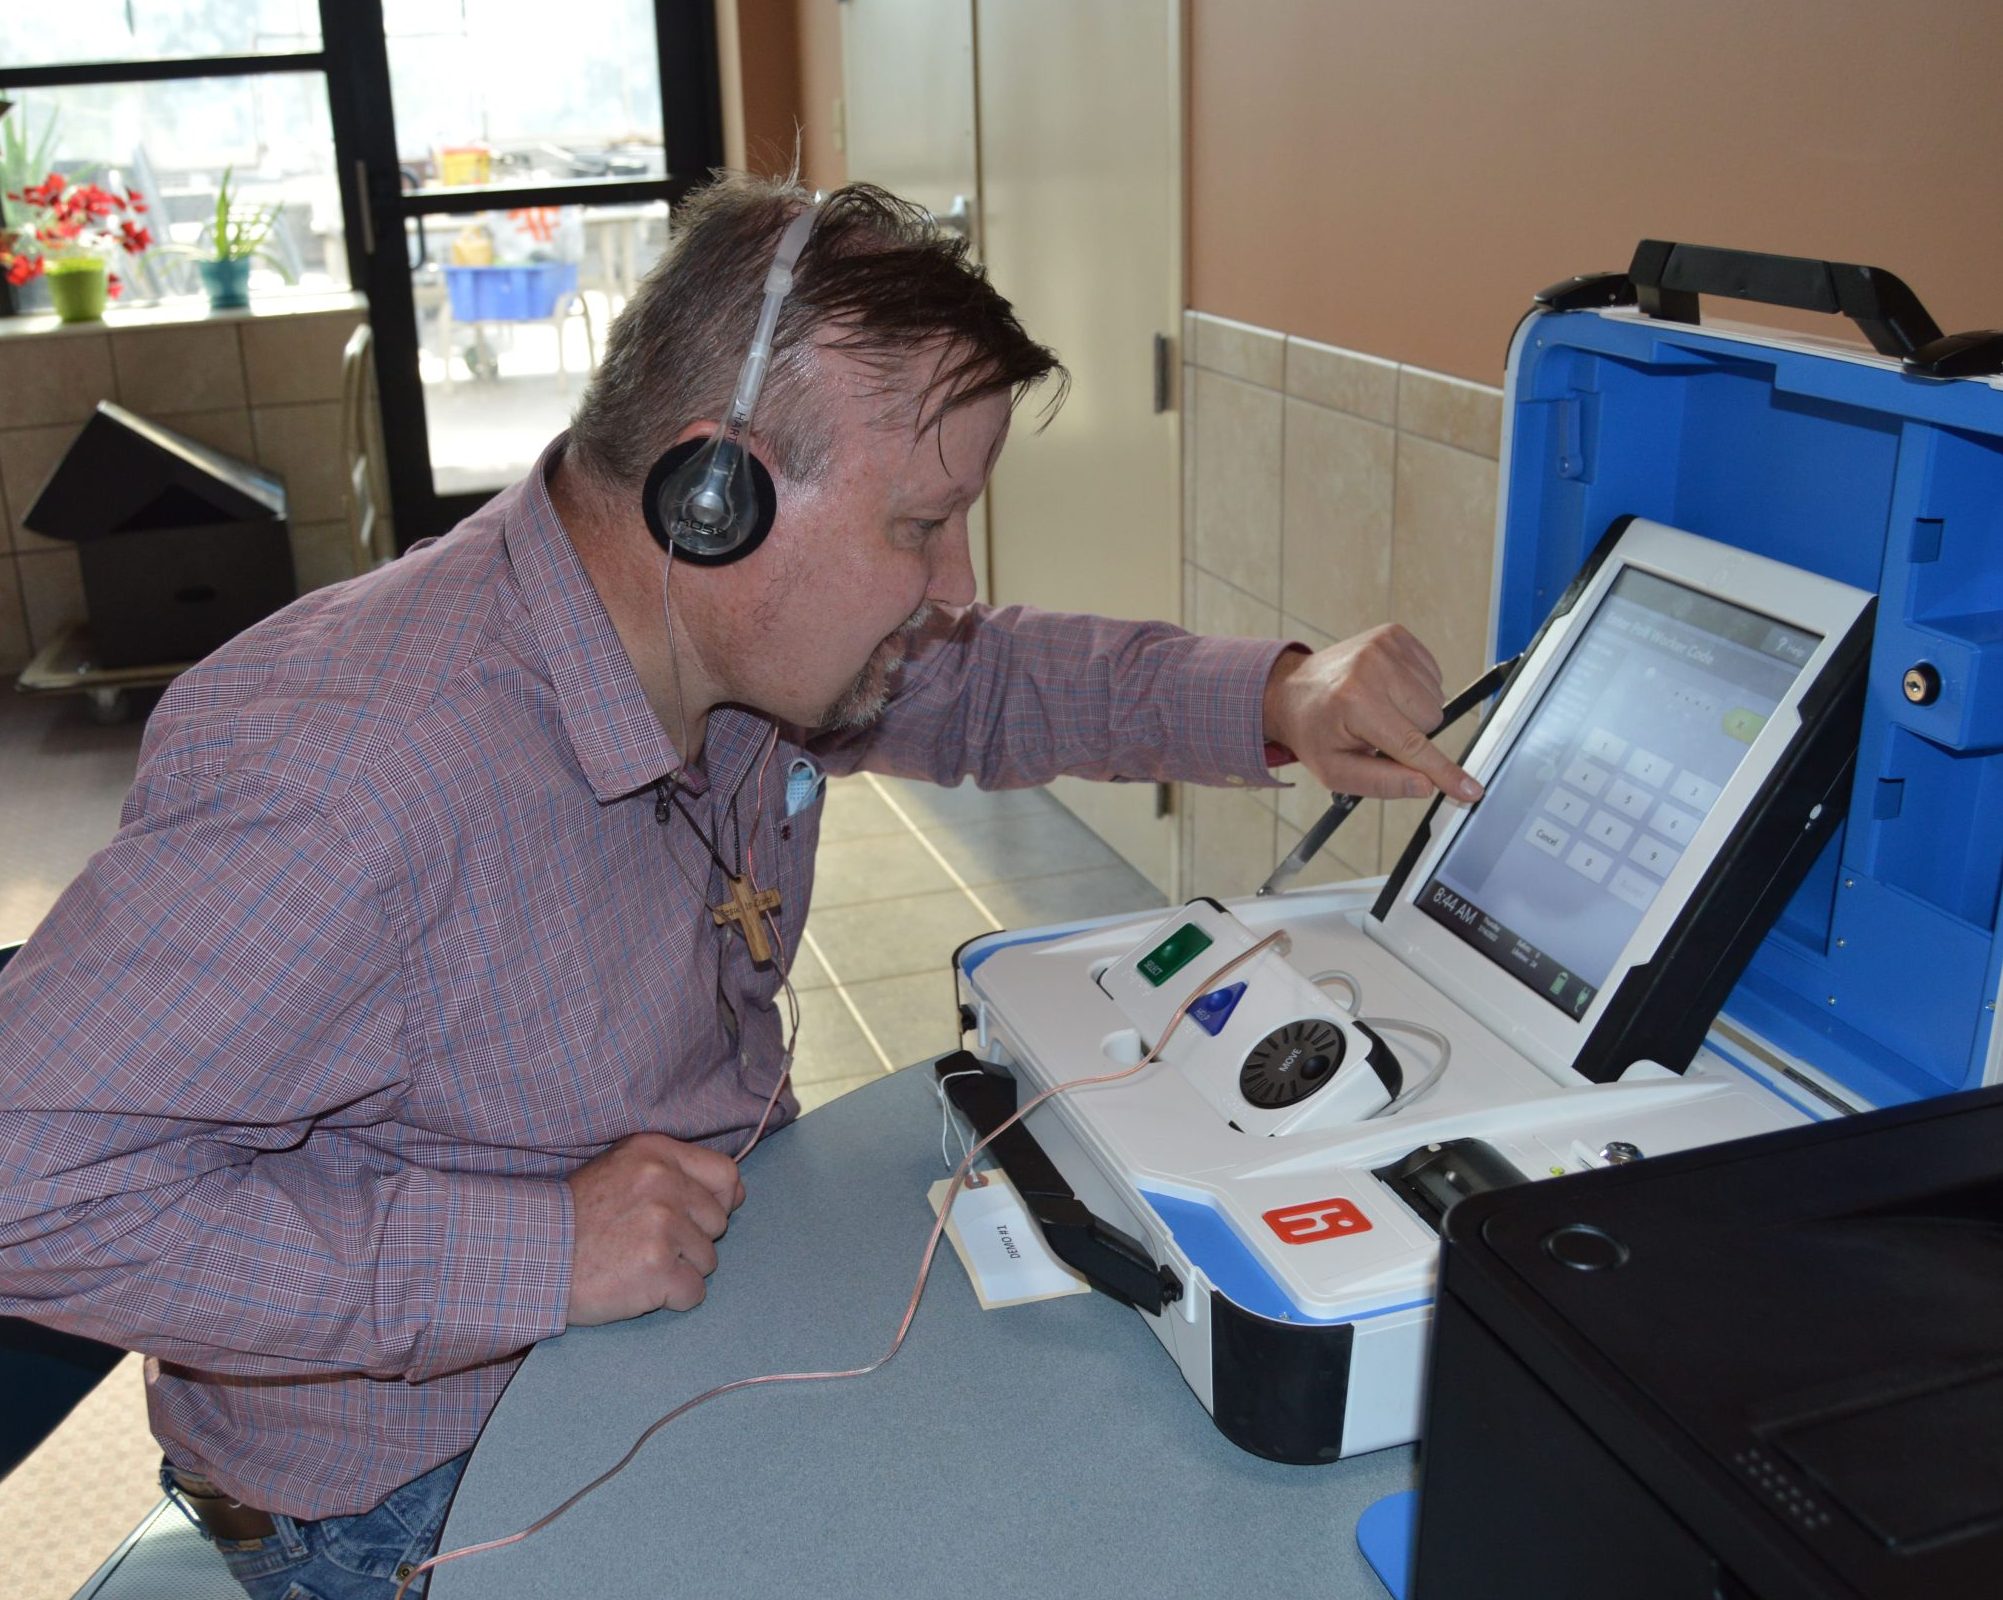 client practices using accessible voting machine